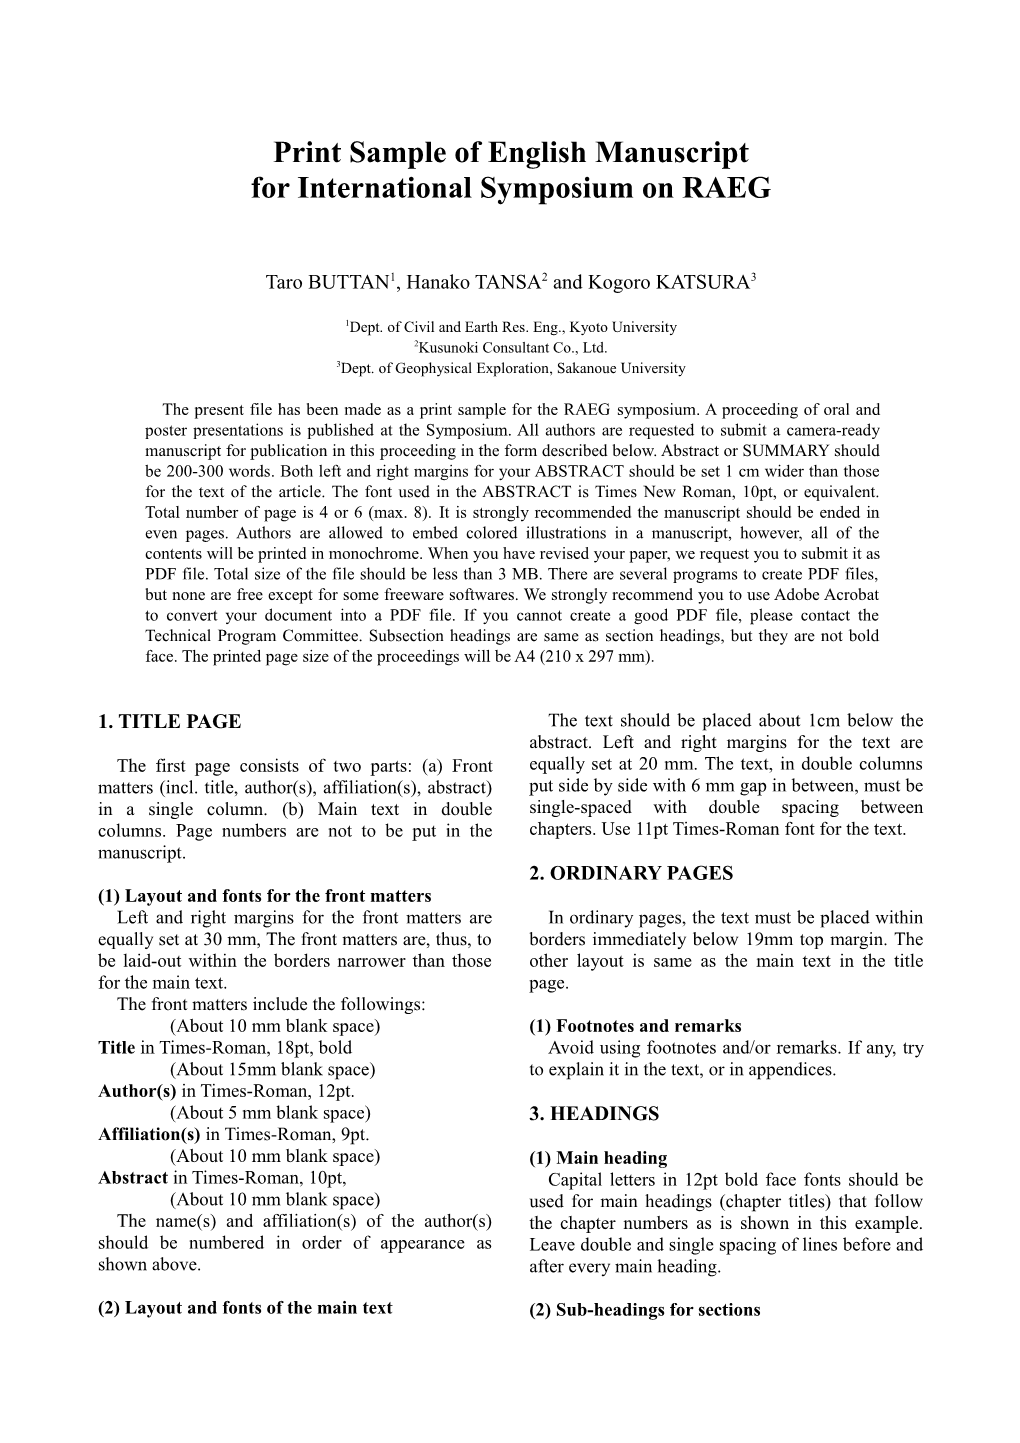 Print Sample of English Manuscript for International Symposium on RAEG